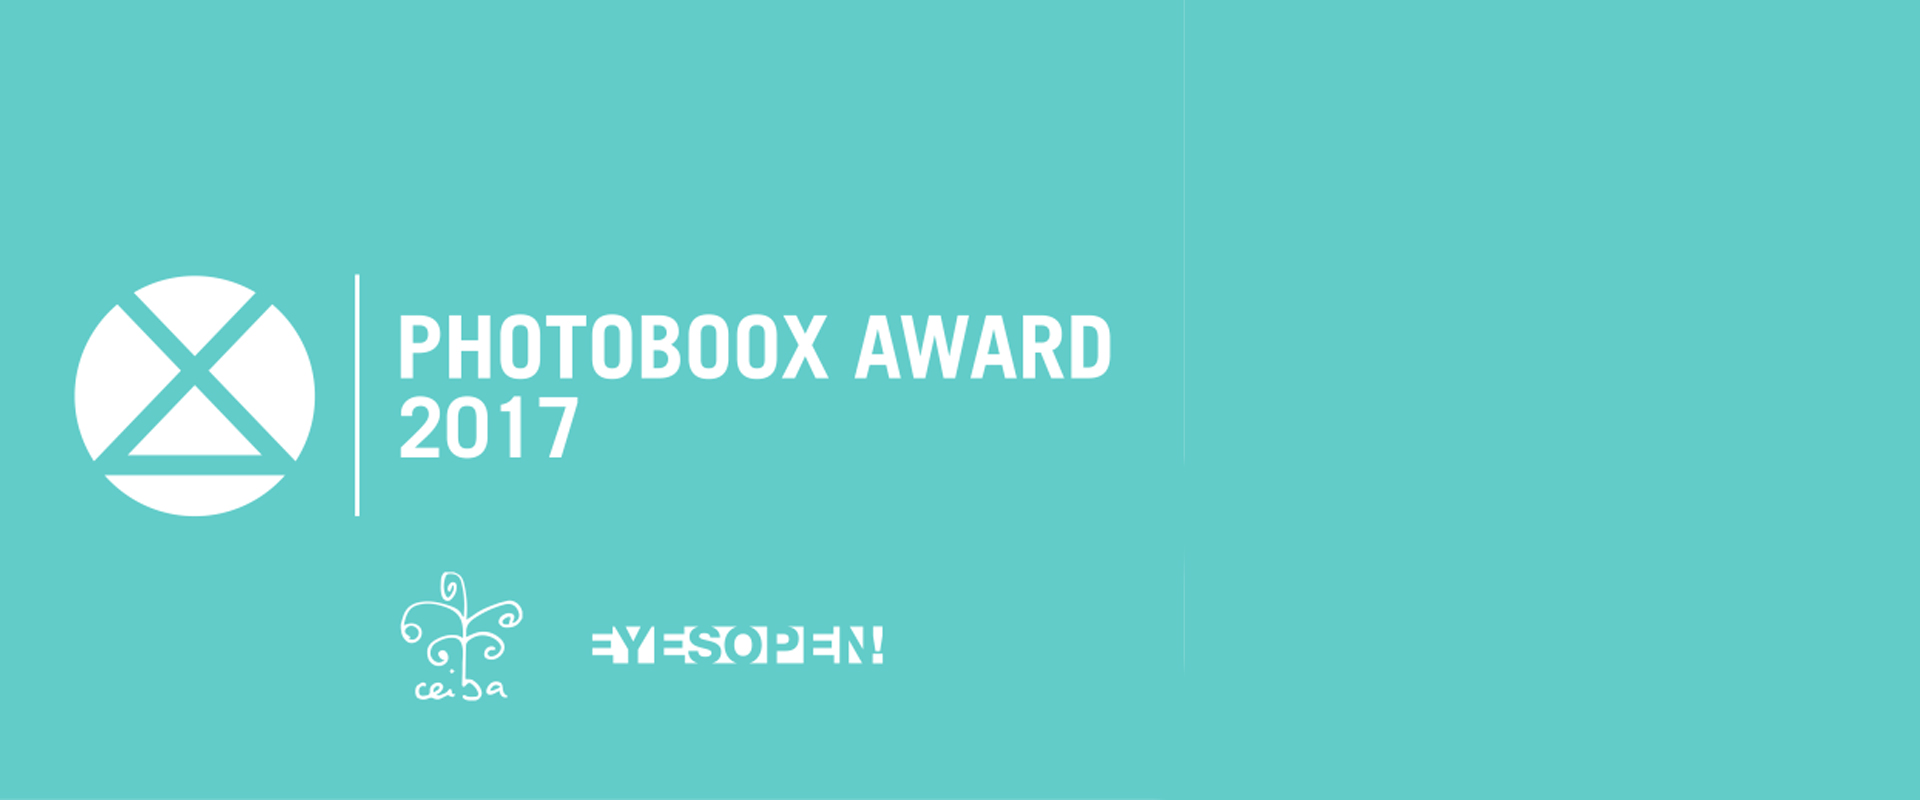 PhotoBoox Award 2017